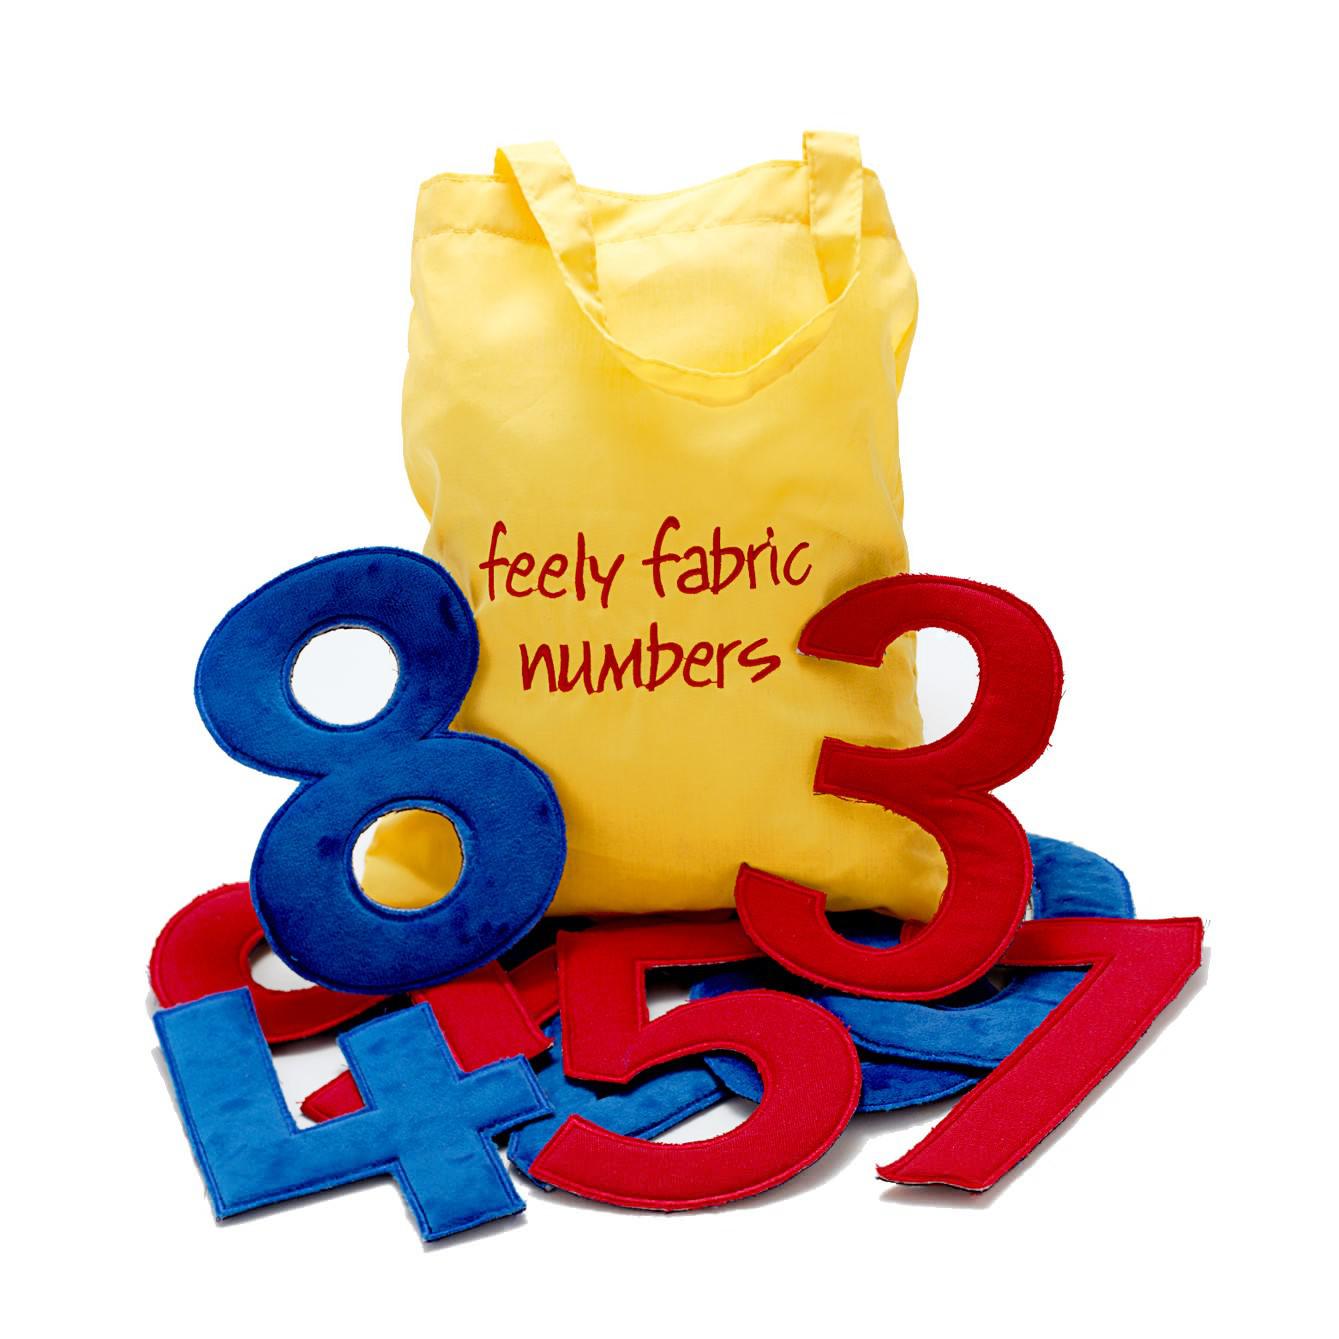 Feely Fabric Numbers - Yellow Door